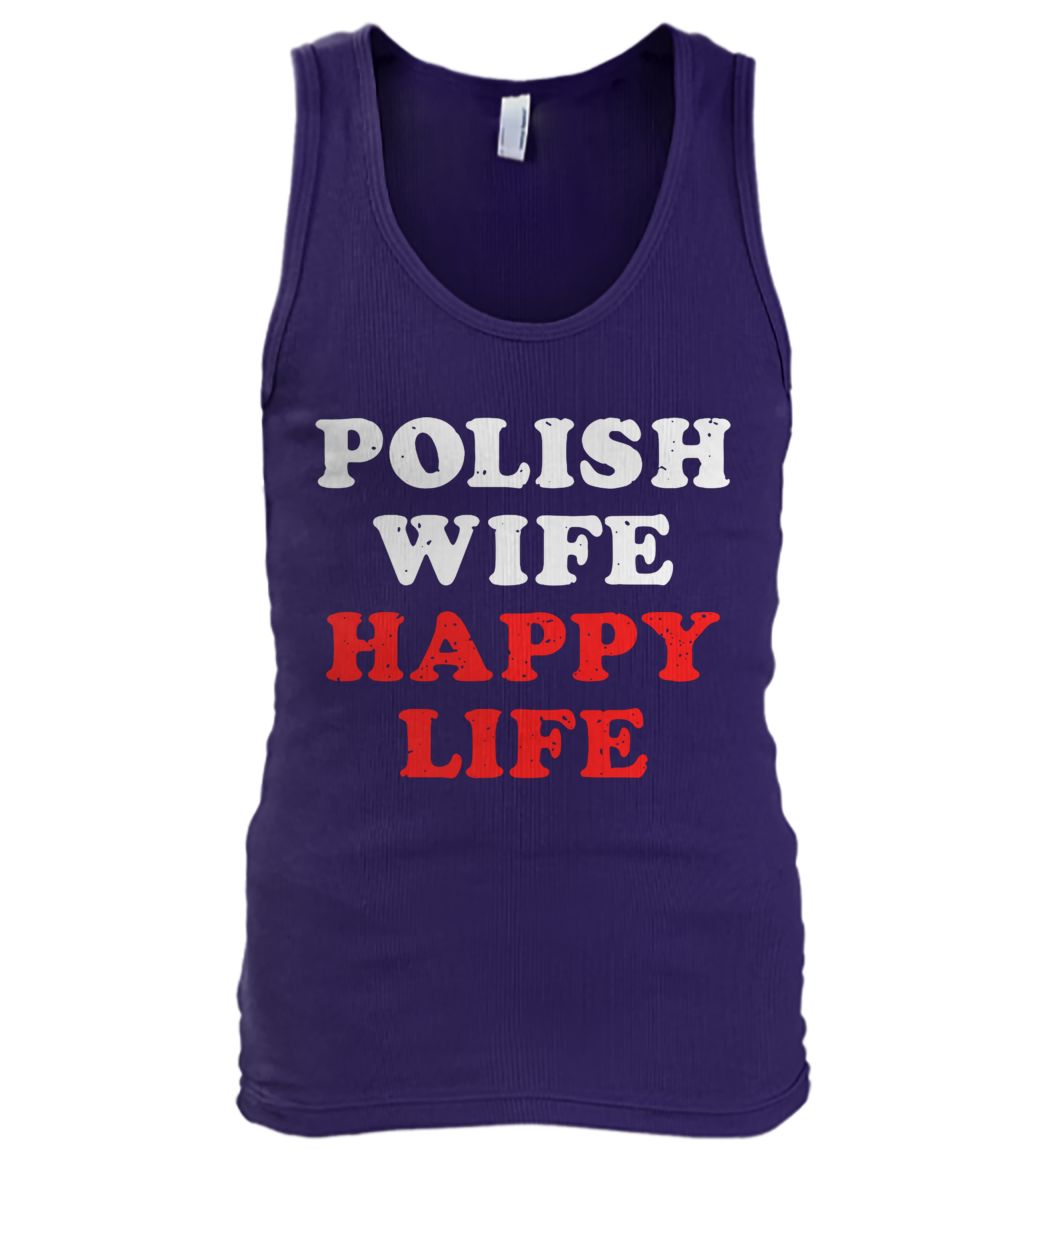 Polish wife happy life men's tank top